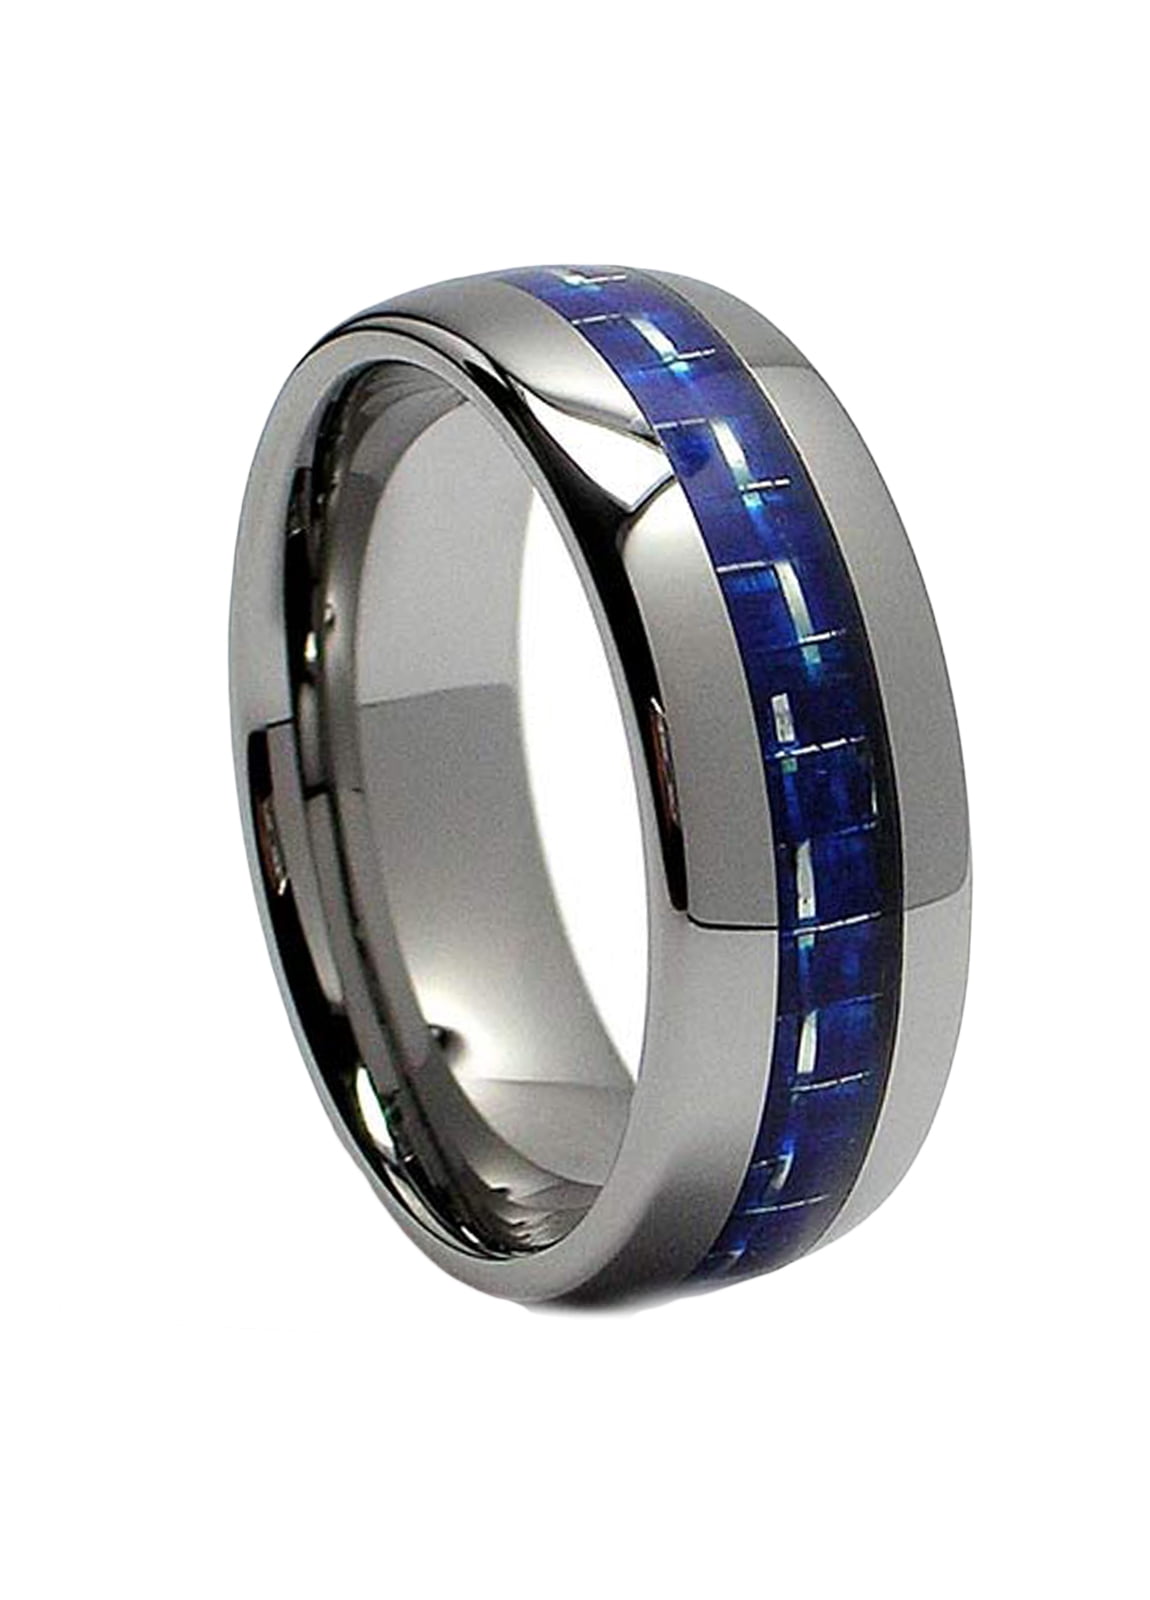 8mm Men Tungsten Carbide Silver carbon Fiber Inlay Domed Wedding Band Ring